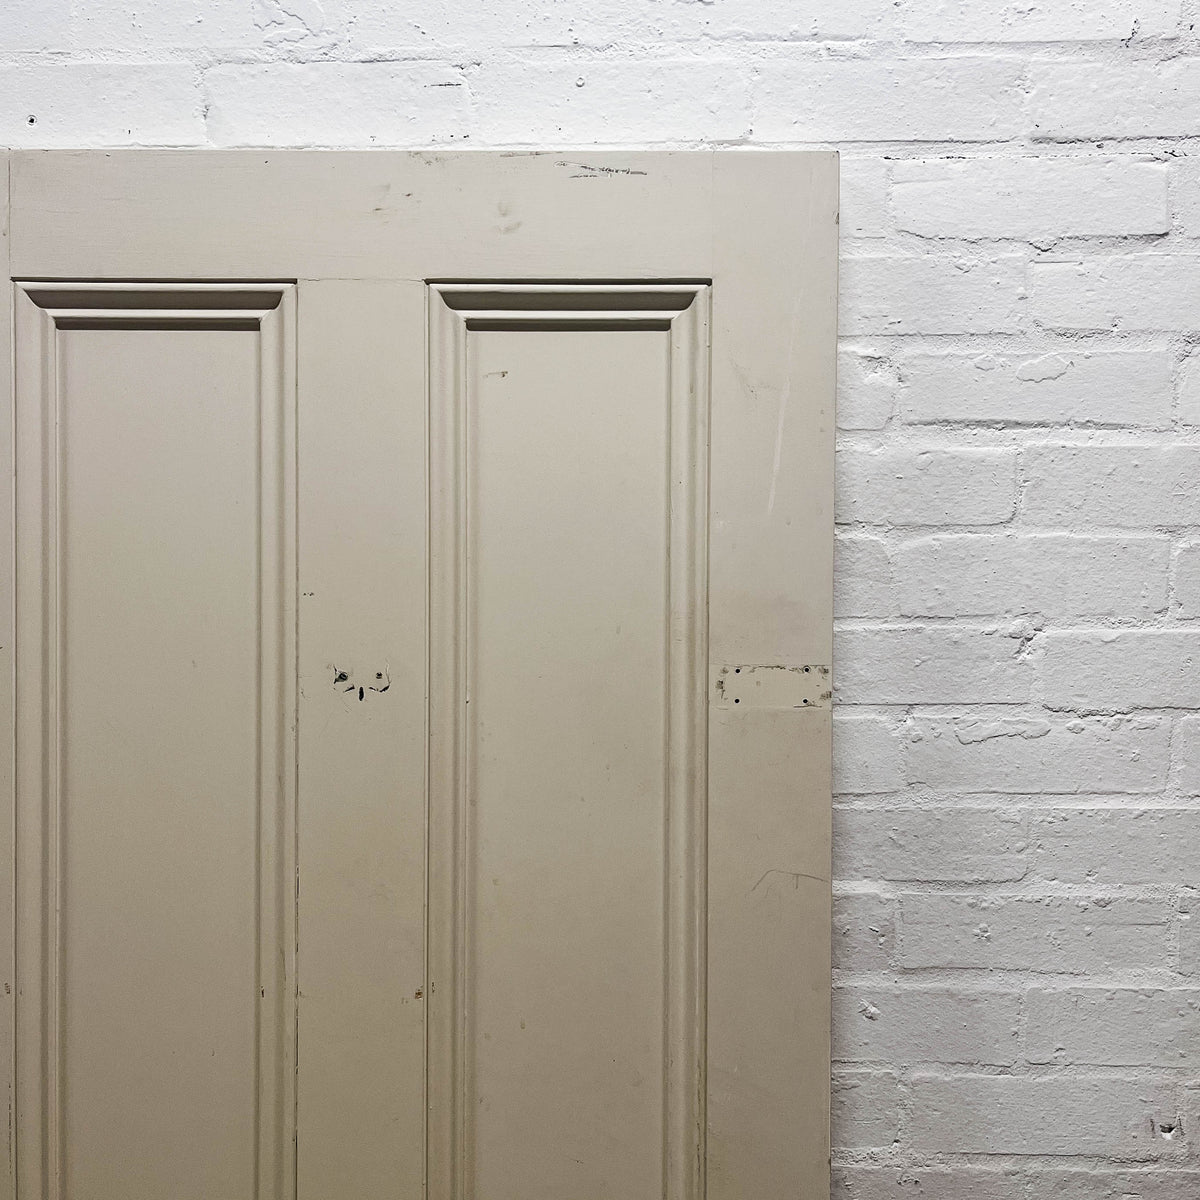 Victorian 4 Panel Antique Door - 201cm x 74.5cm | The Architectural Forum